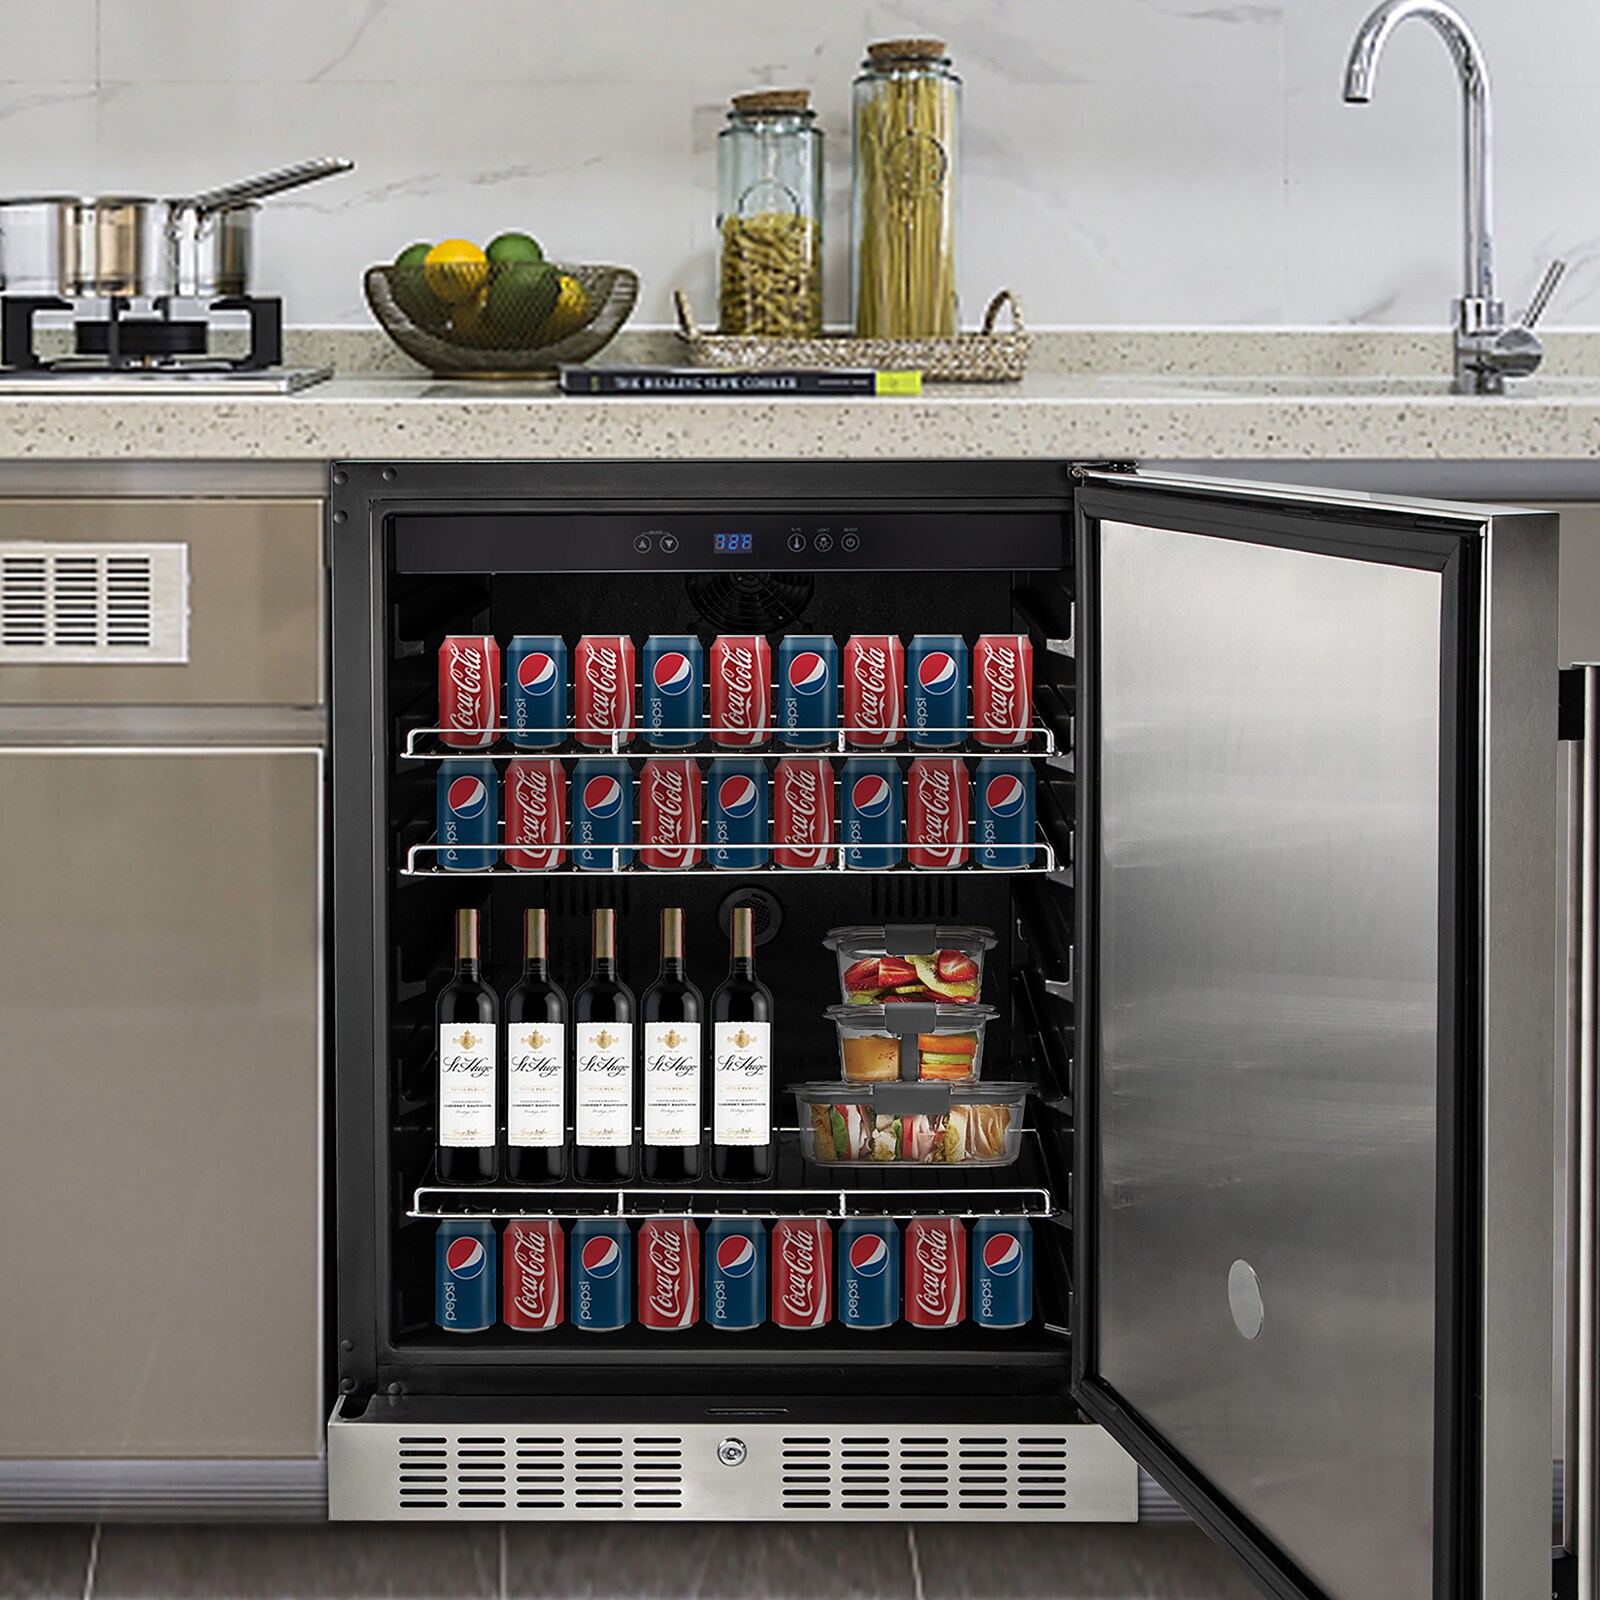 VEVOR 24 Undercounter Refrigerator, 2 Drawer Built-in Beverage